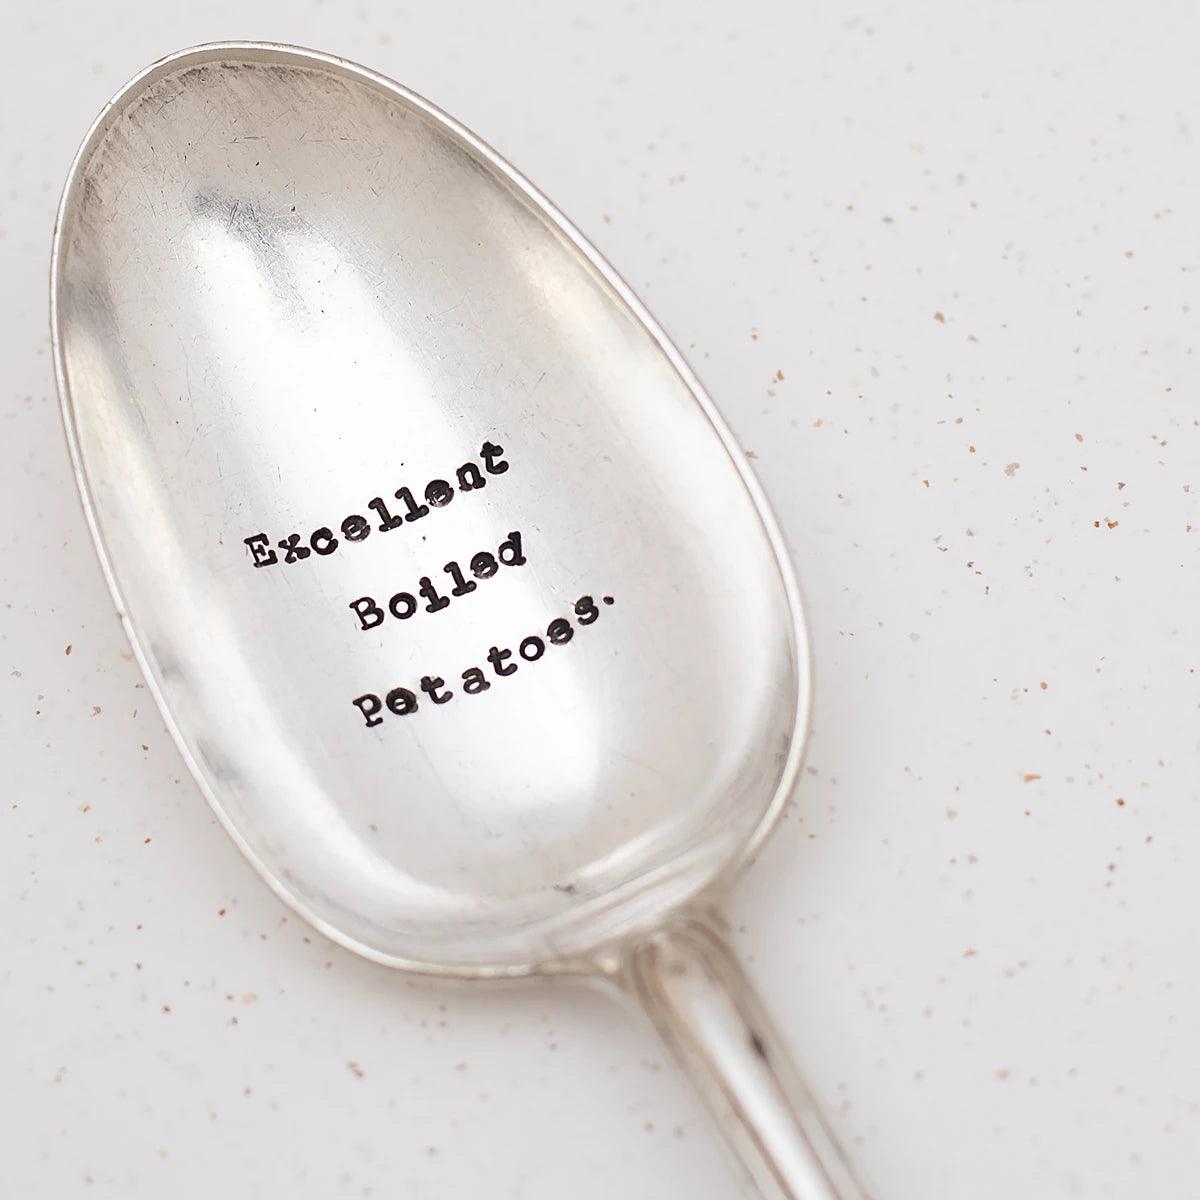 "Excellent boiled potatoes" Vintage Serving Spoon - JaneAusten.co.uk